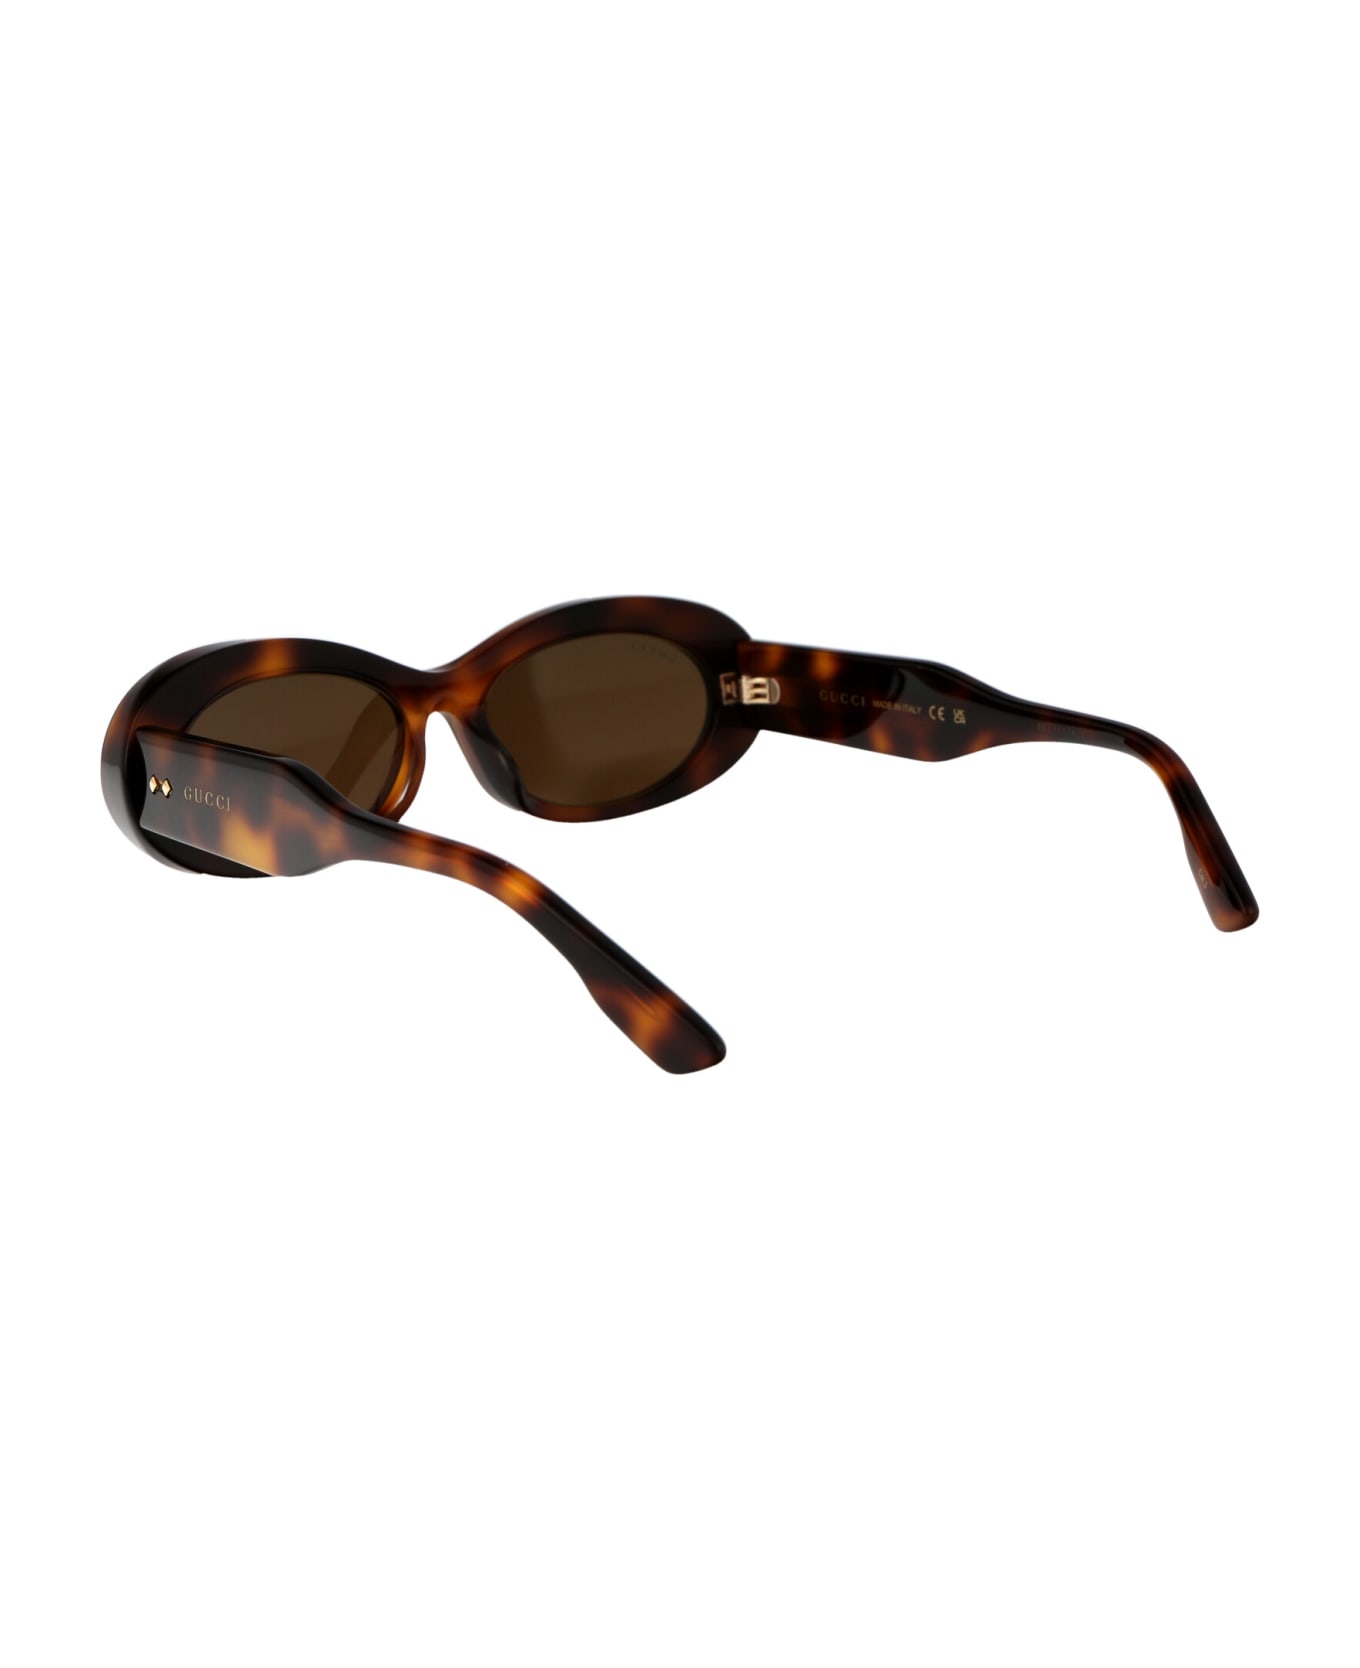 Gucci Eyewear Gg1527s Sunglasses - 002 HAVANA HAVANA BROWN